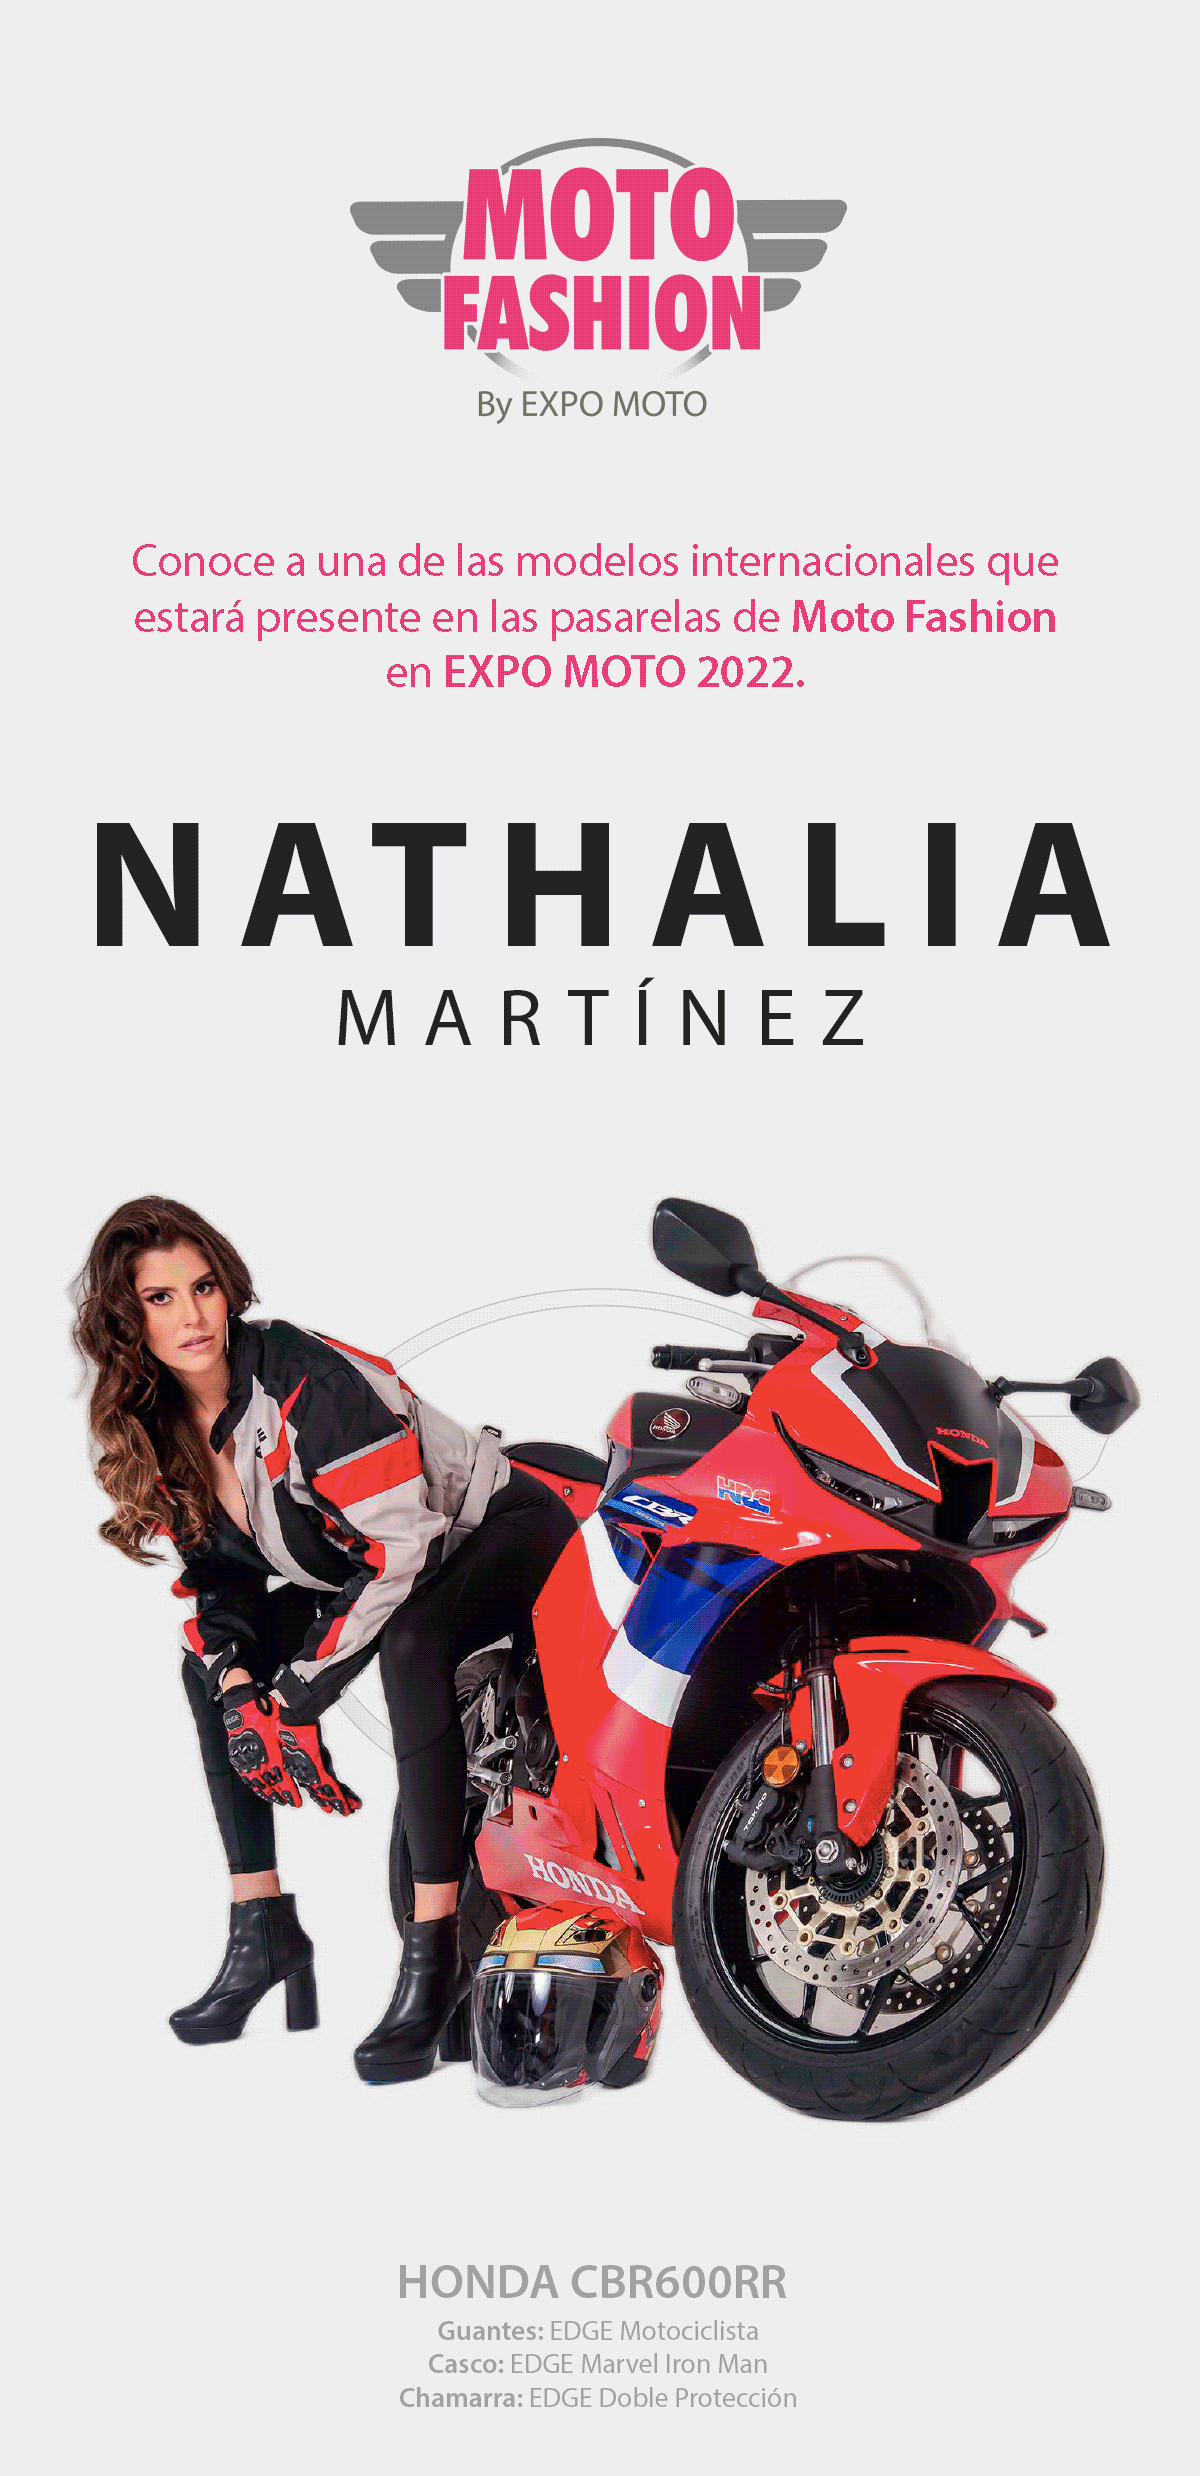 NATHALIA MODELO MOTO FASHION EN Expo Moto 2022 | Motociclo